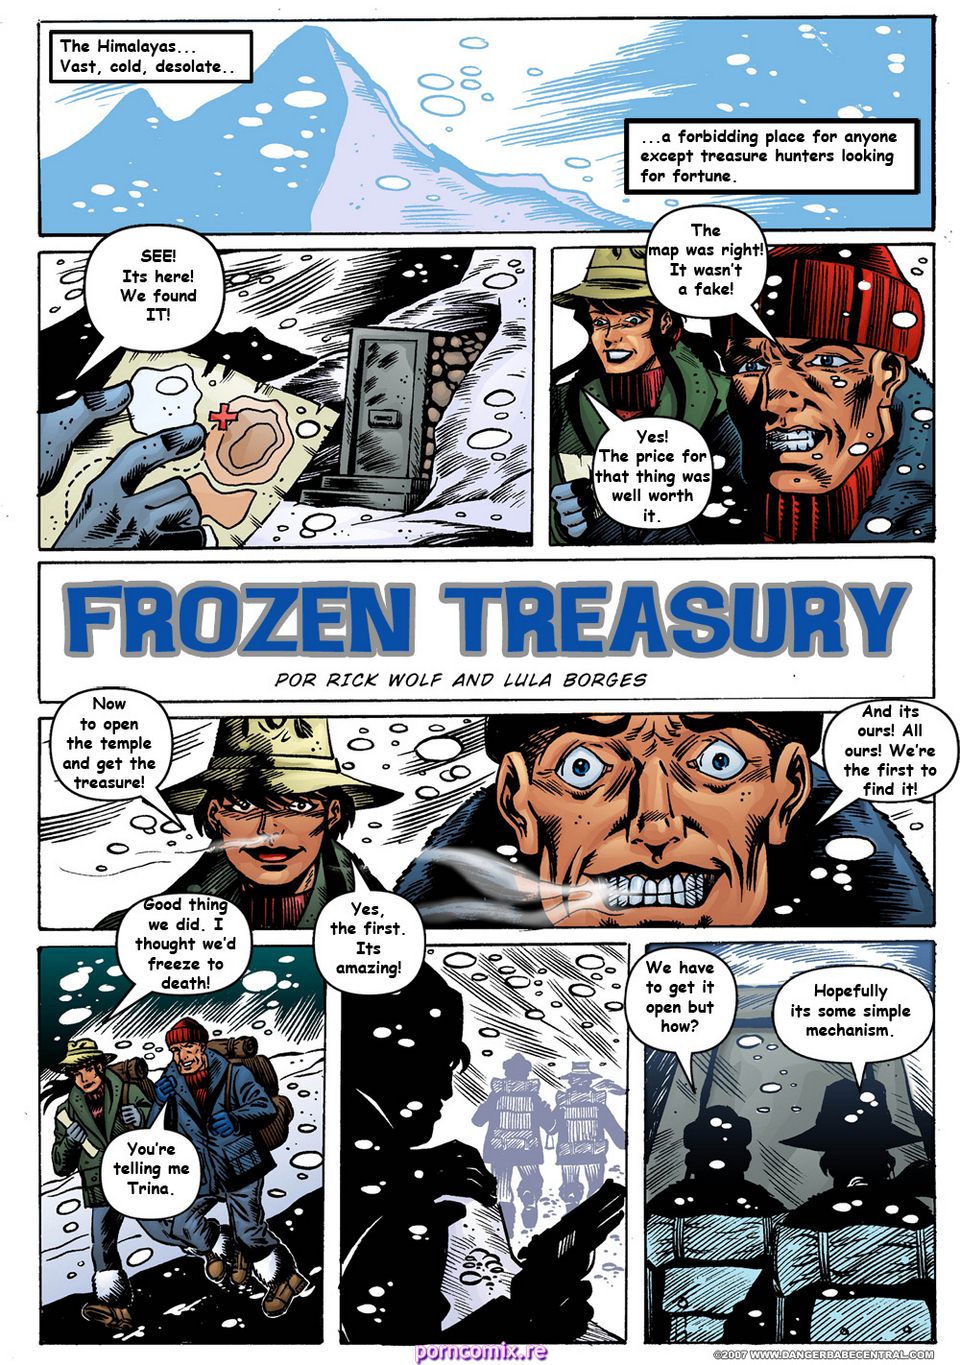 Trina jones eingefroren treasury